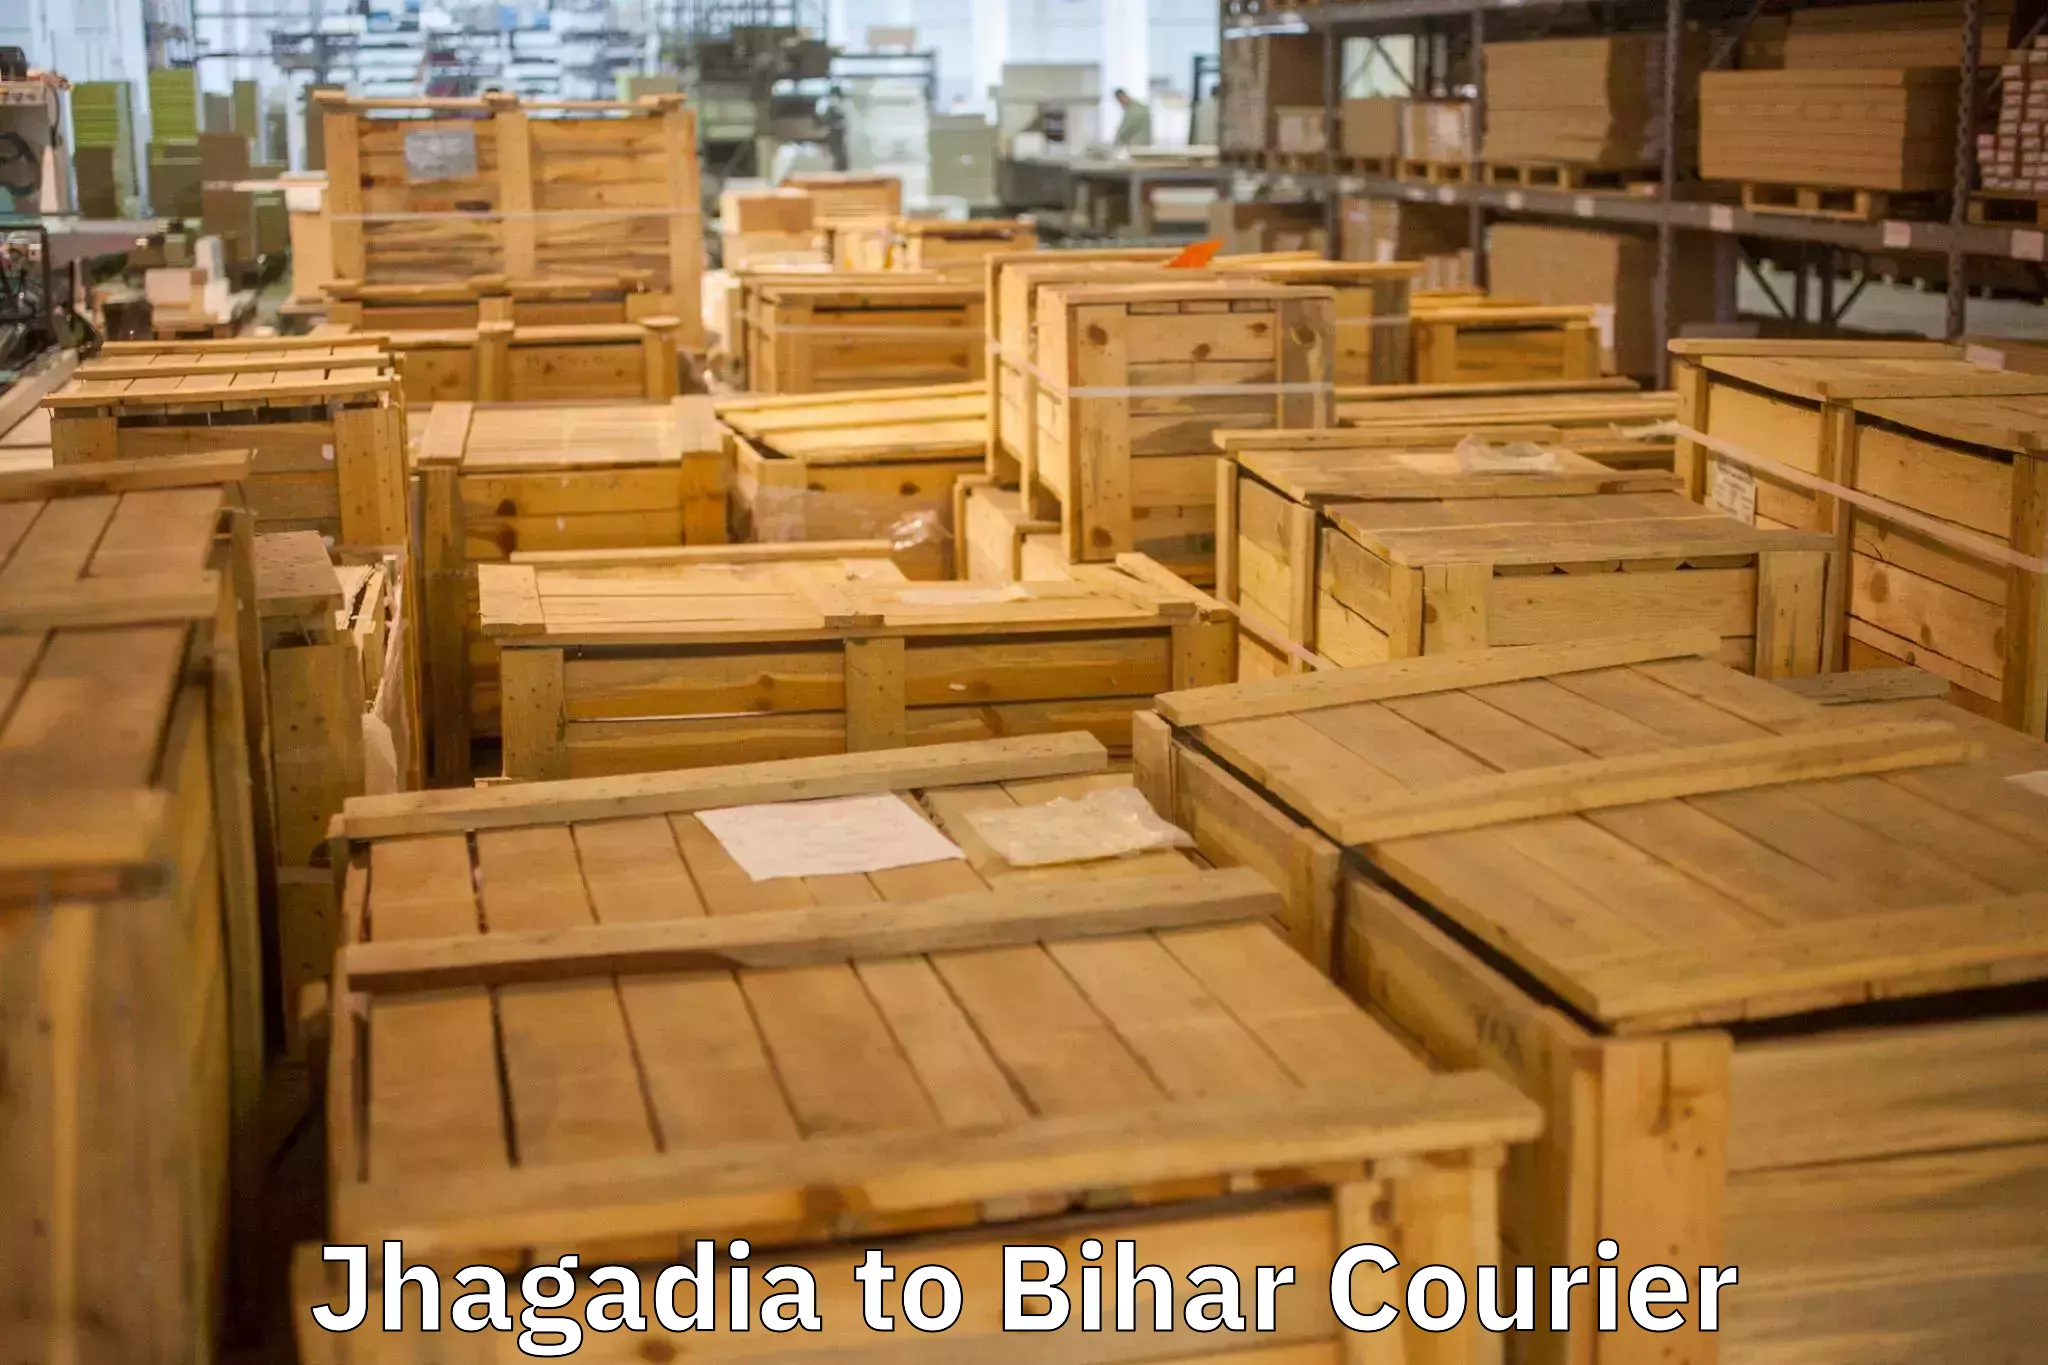 Trusted household movers in Jhagadia to Khagaria